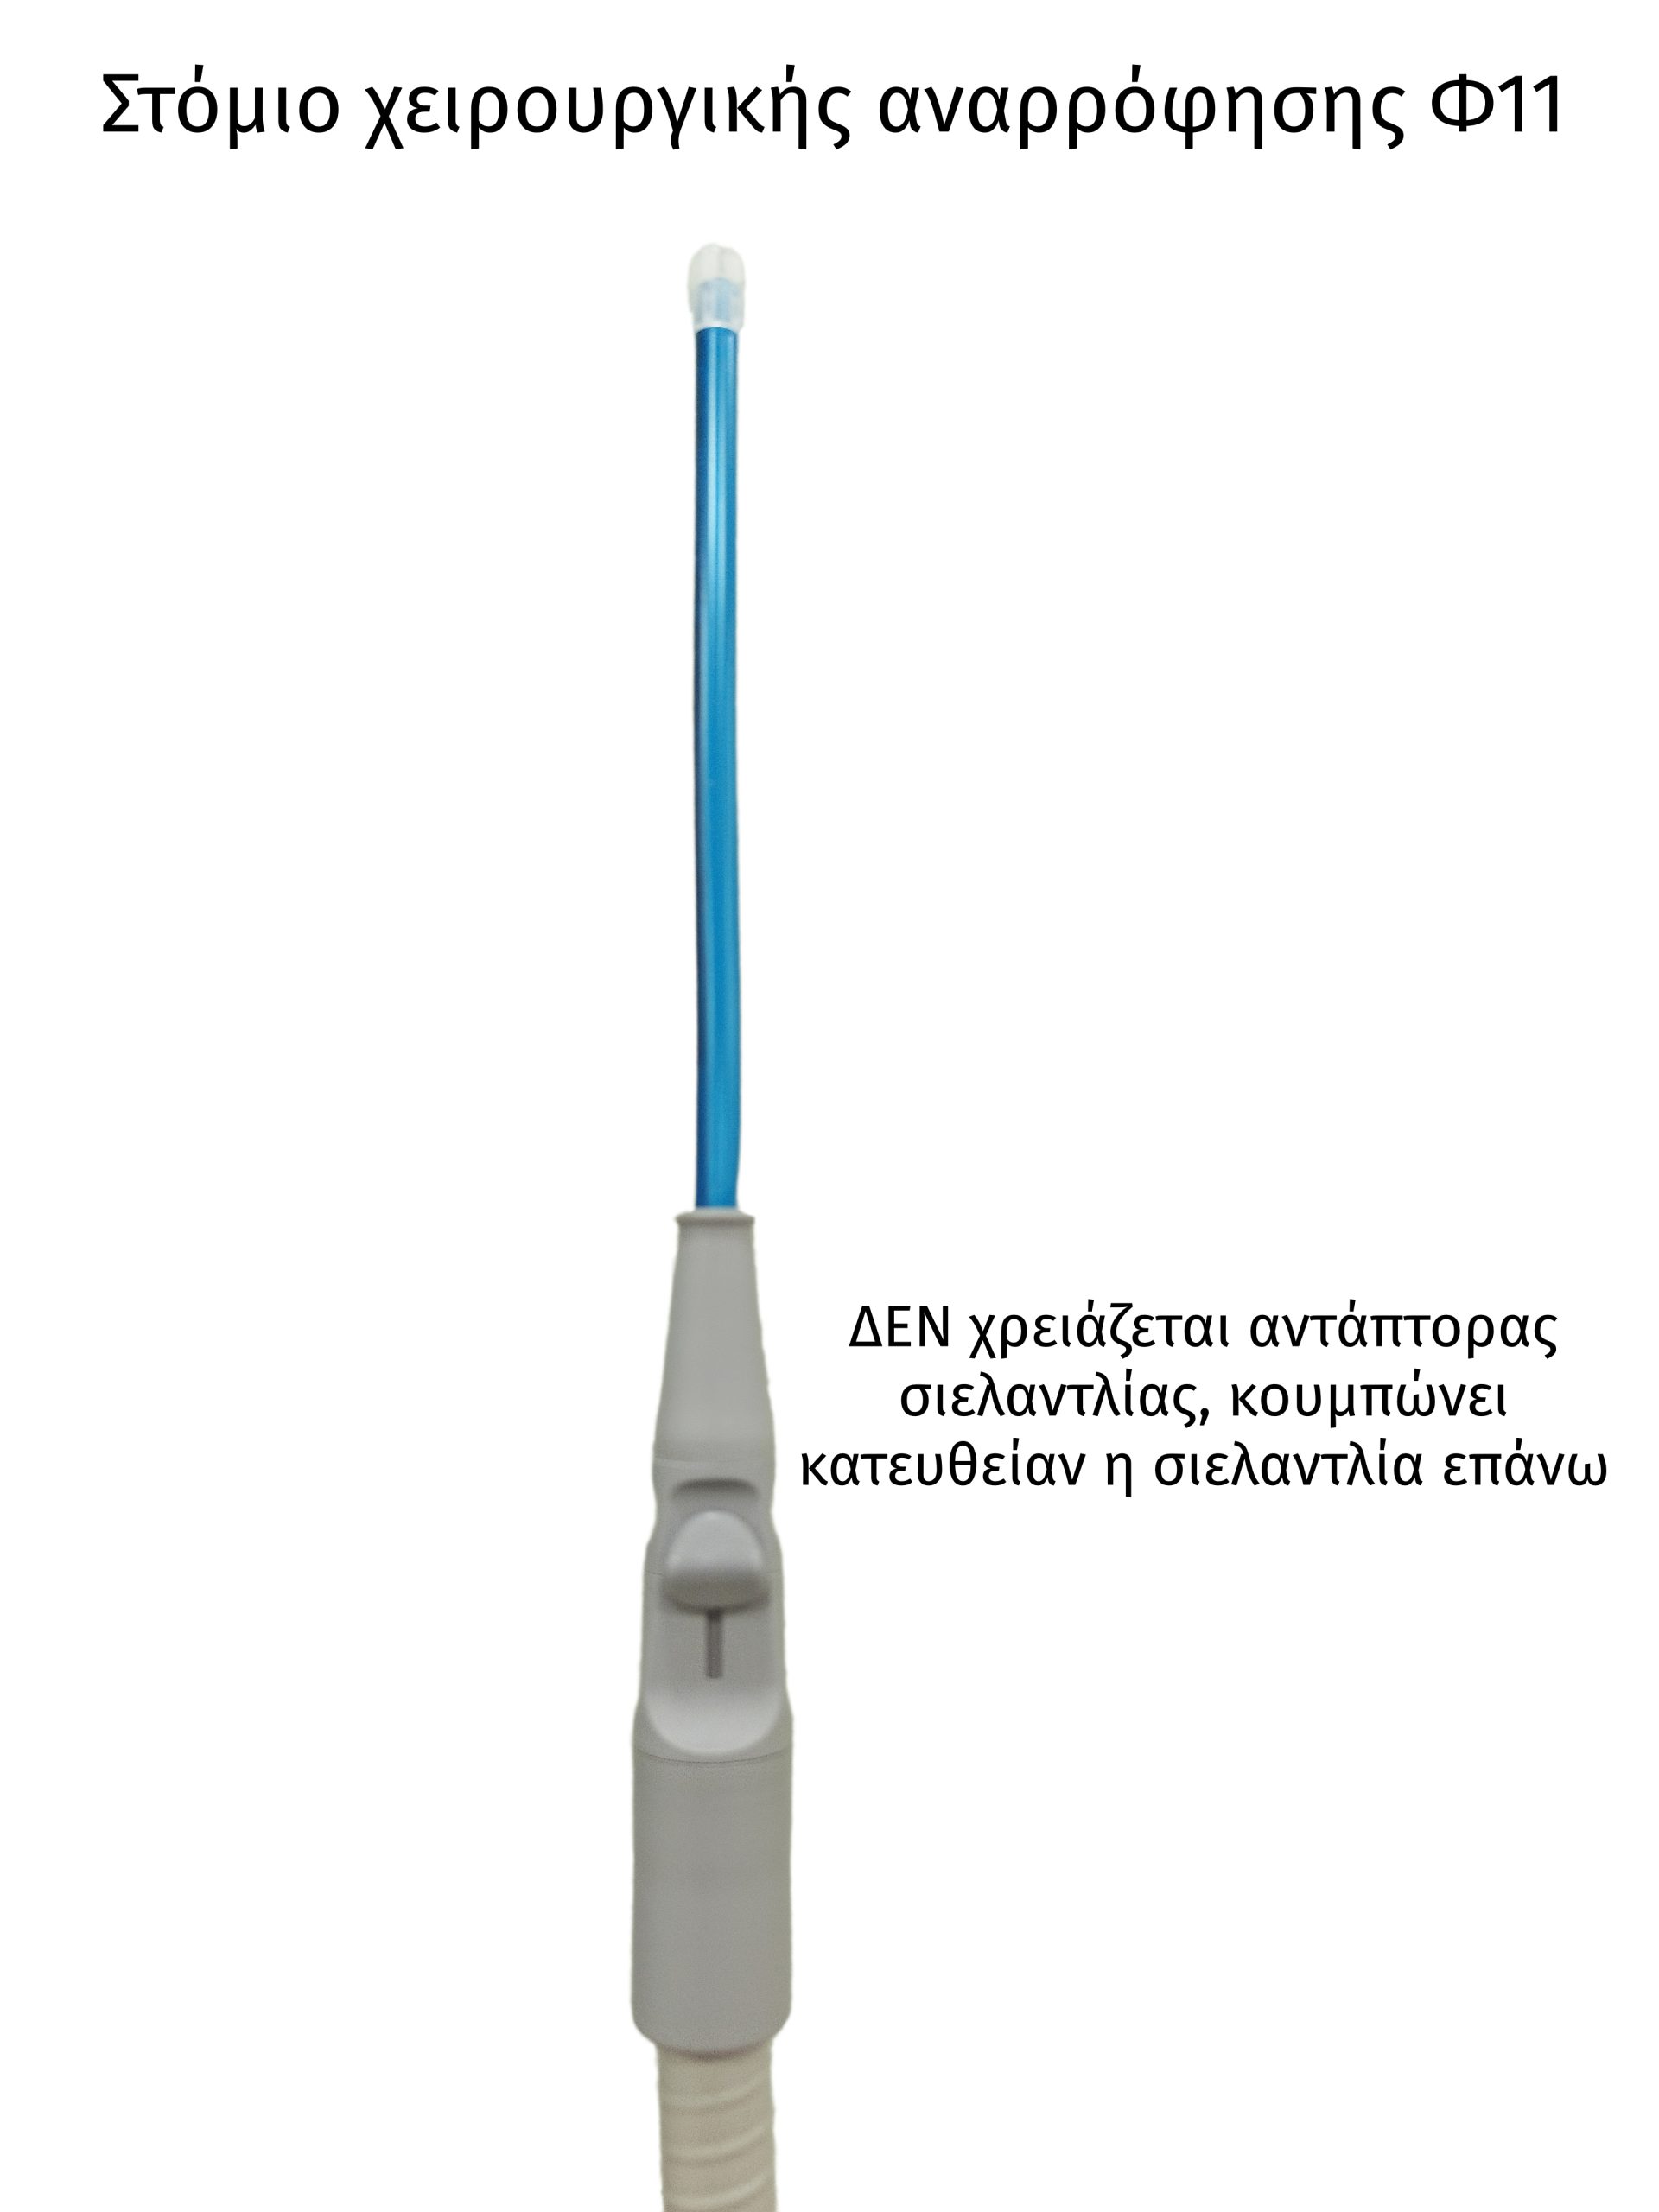 Durr στόμιο χειρουργικής αναρρόφησης Φ6 με ενσωματωμένο αντάπτορα σιελαντλίας, σε γκρι χρώμα